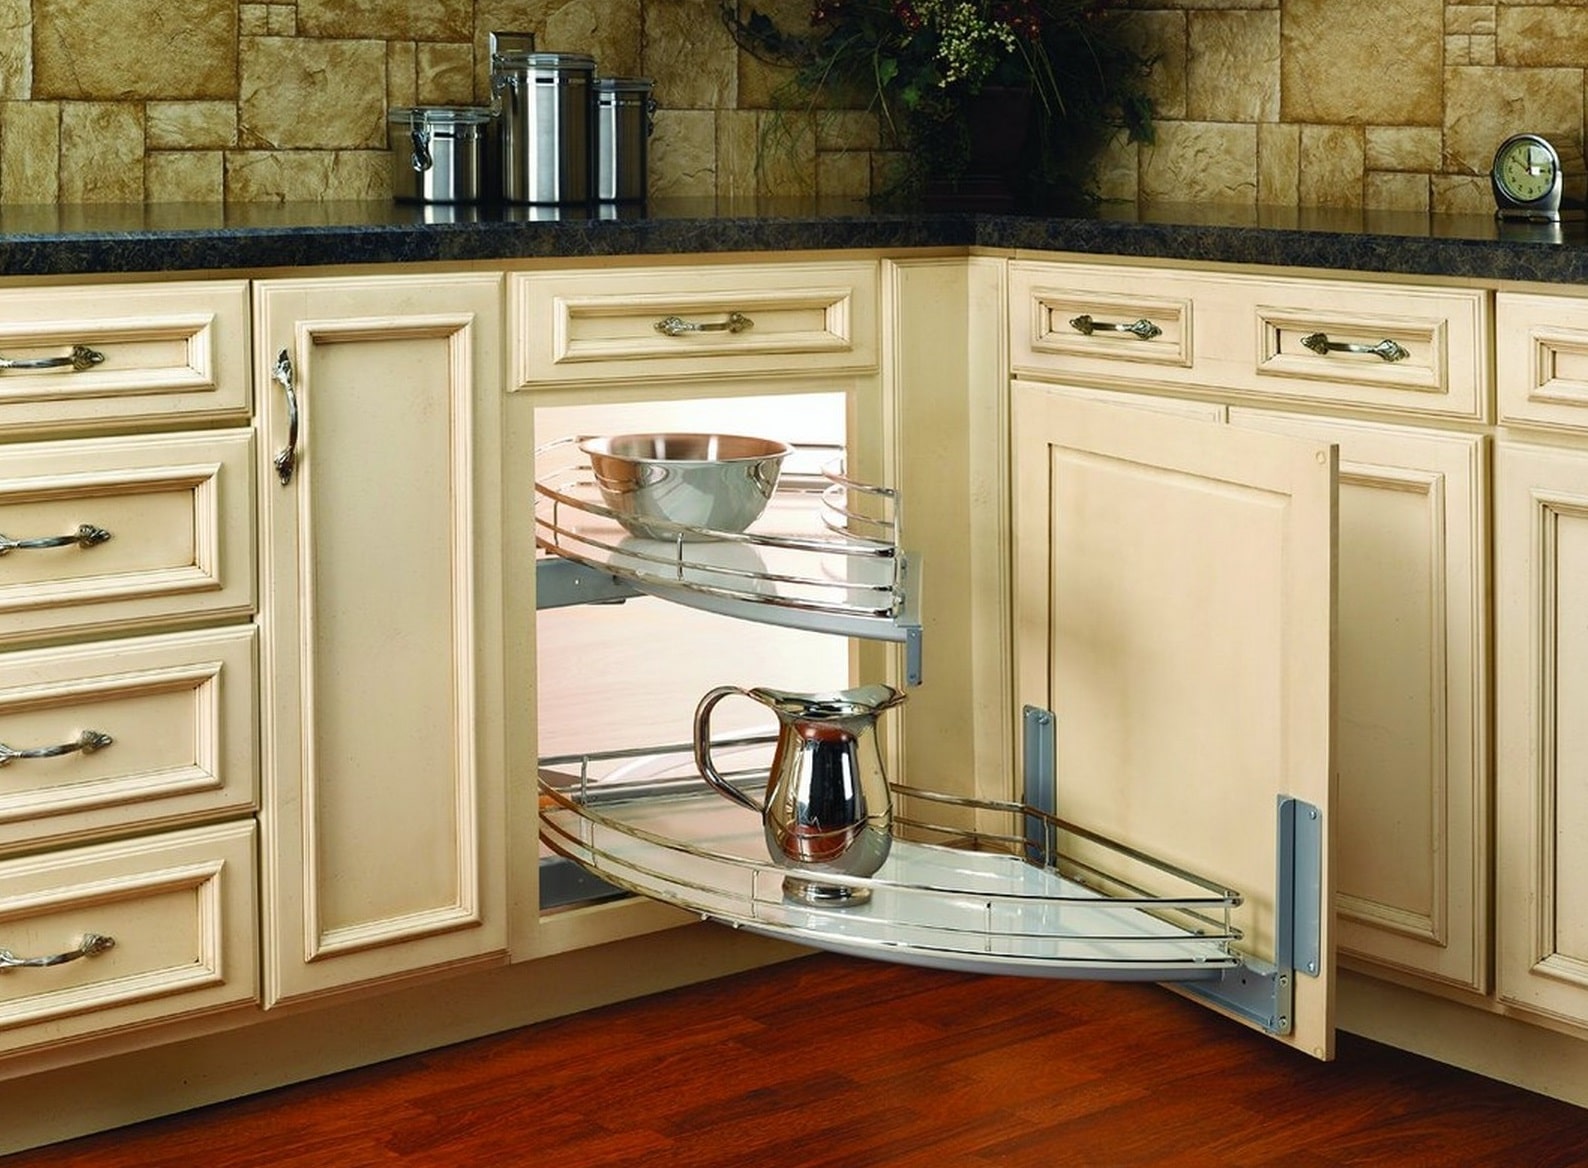 https://www.bestonlinecabinets.com/blog/wp-content/uploads/2018/07/kitchen-corner-cabinets.jpg